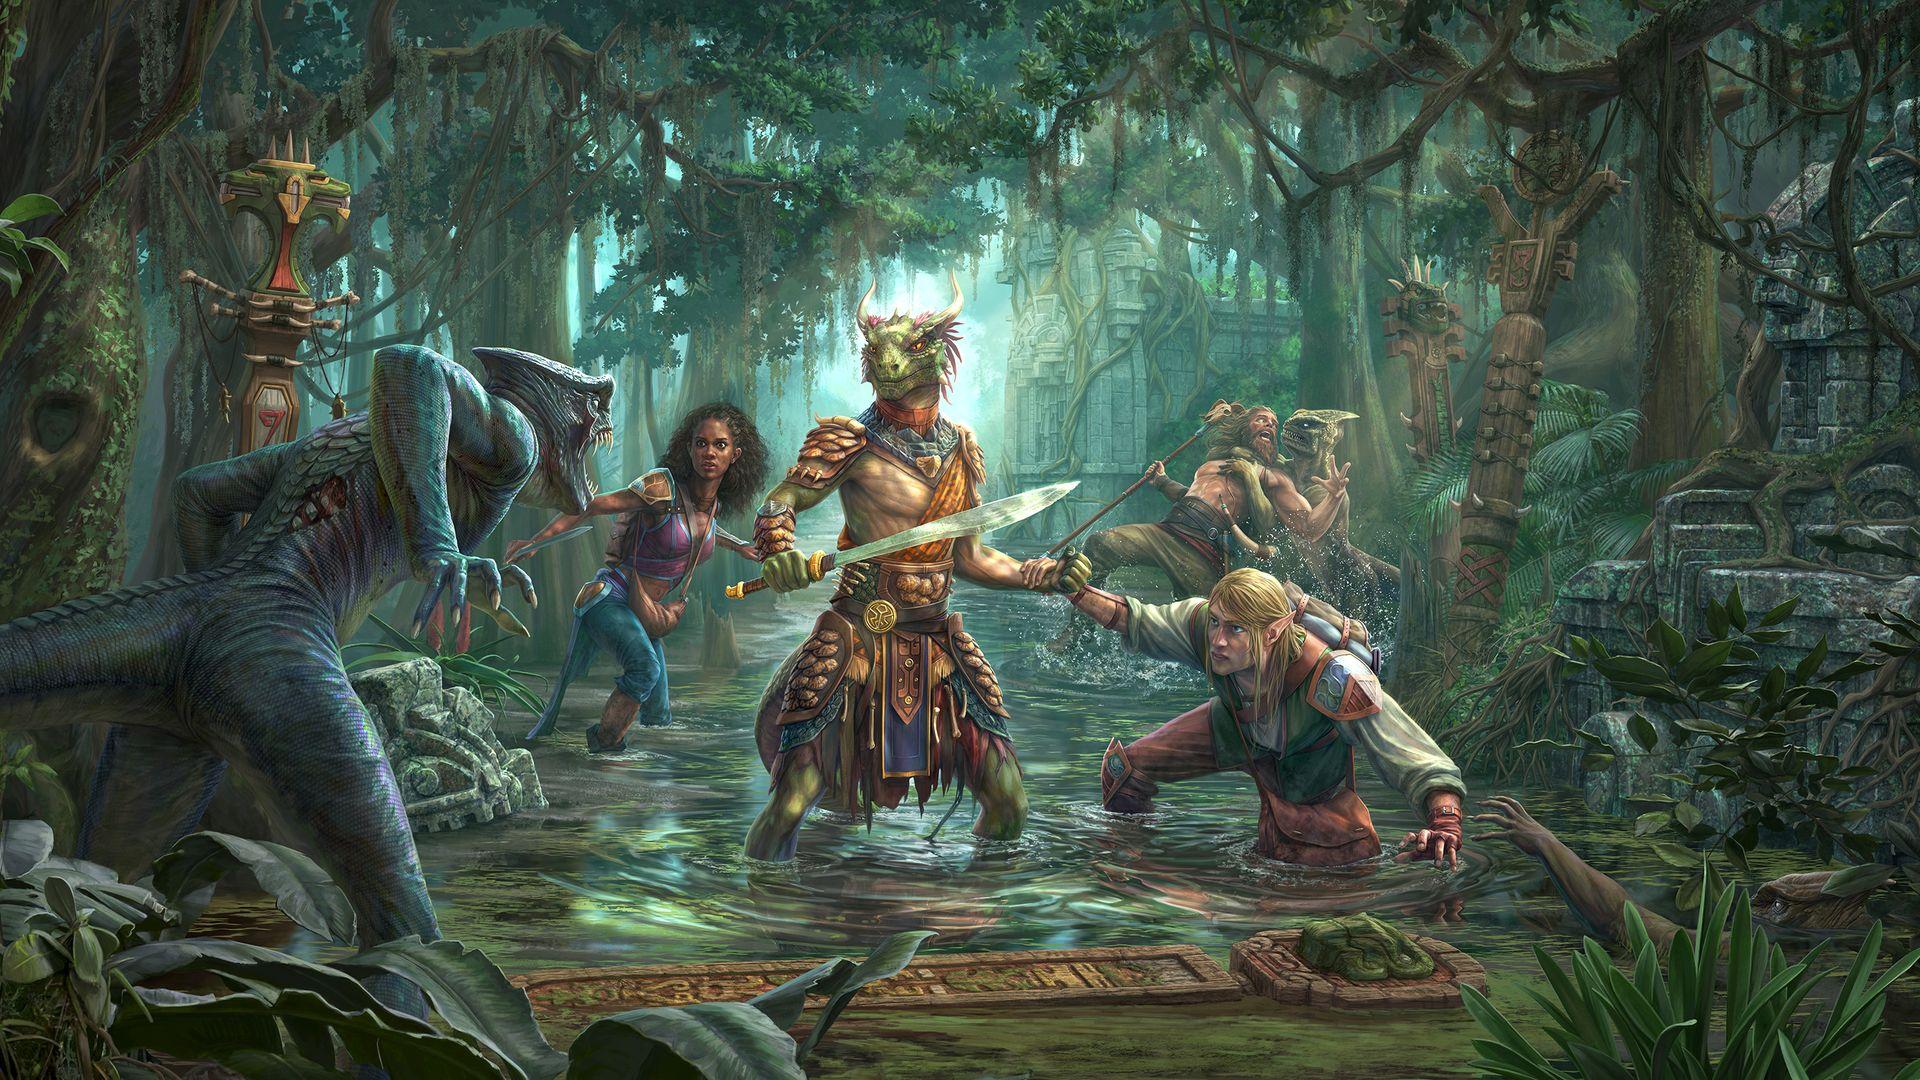 The Elder Scrolls Online: Stonethorn & Update 27 Now Live on All Platforms  - The Elder Scrolls Online